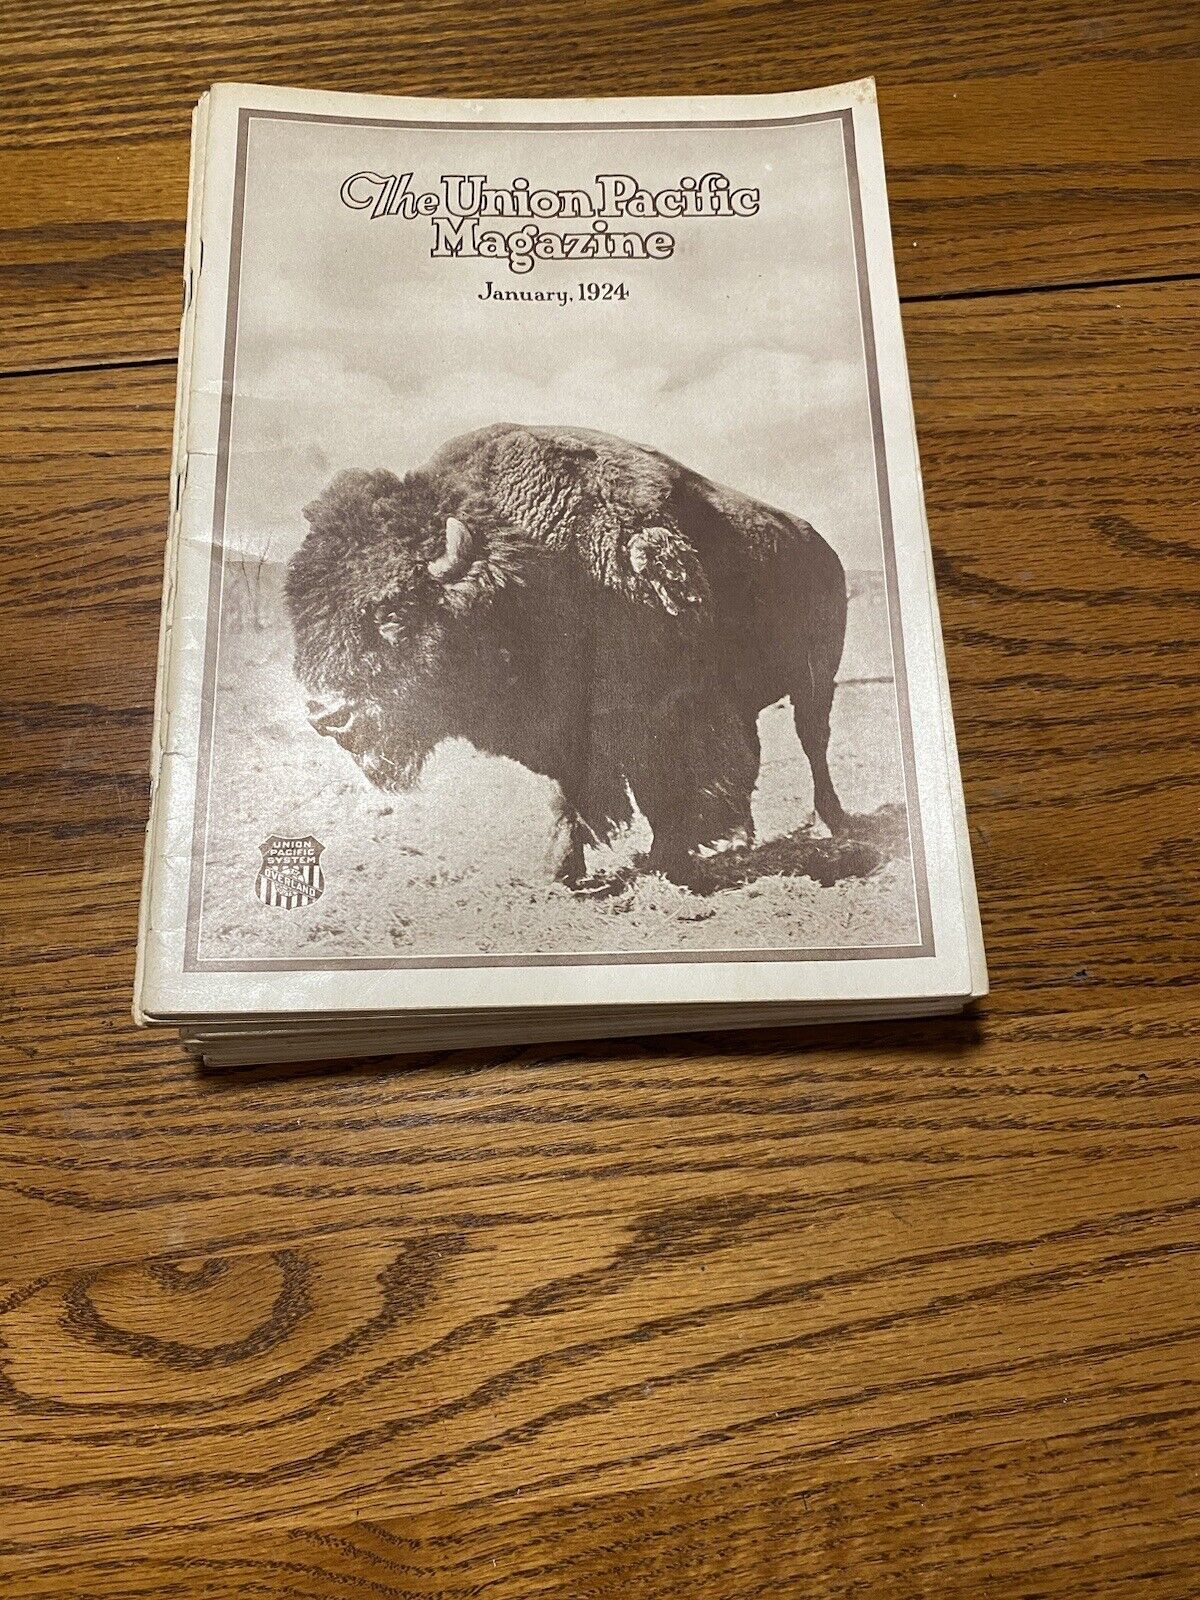 1924 Union Pacific Railroad Magazines Ephemera - Complete All 12 Issues